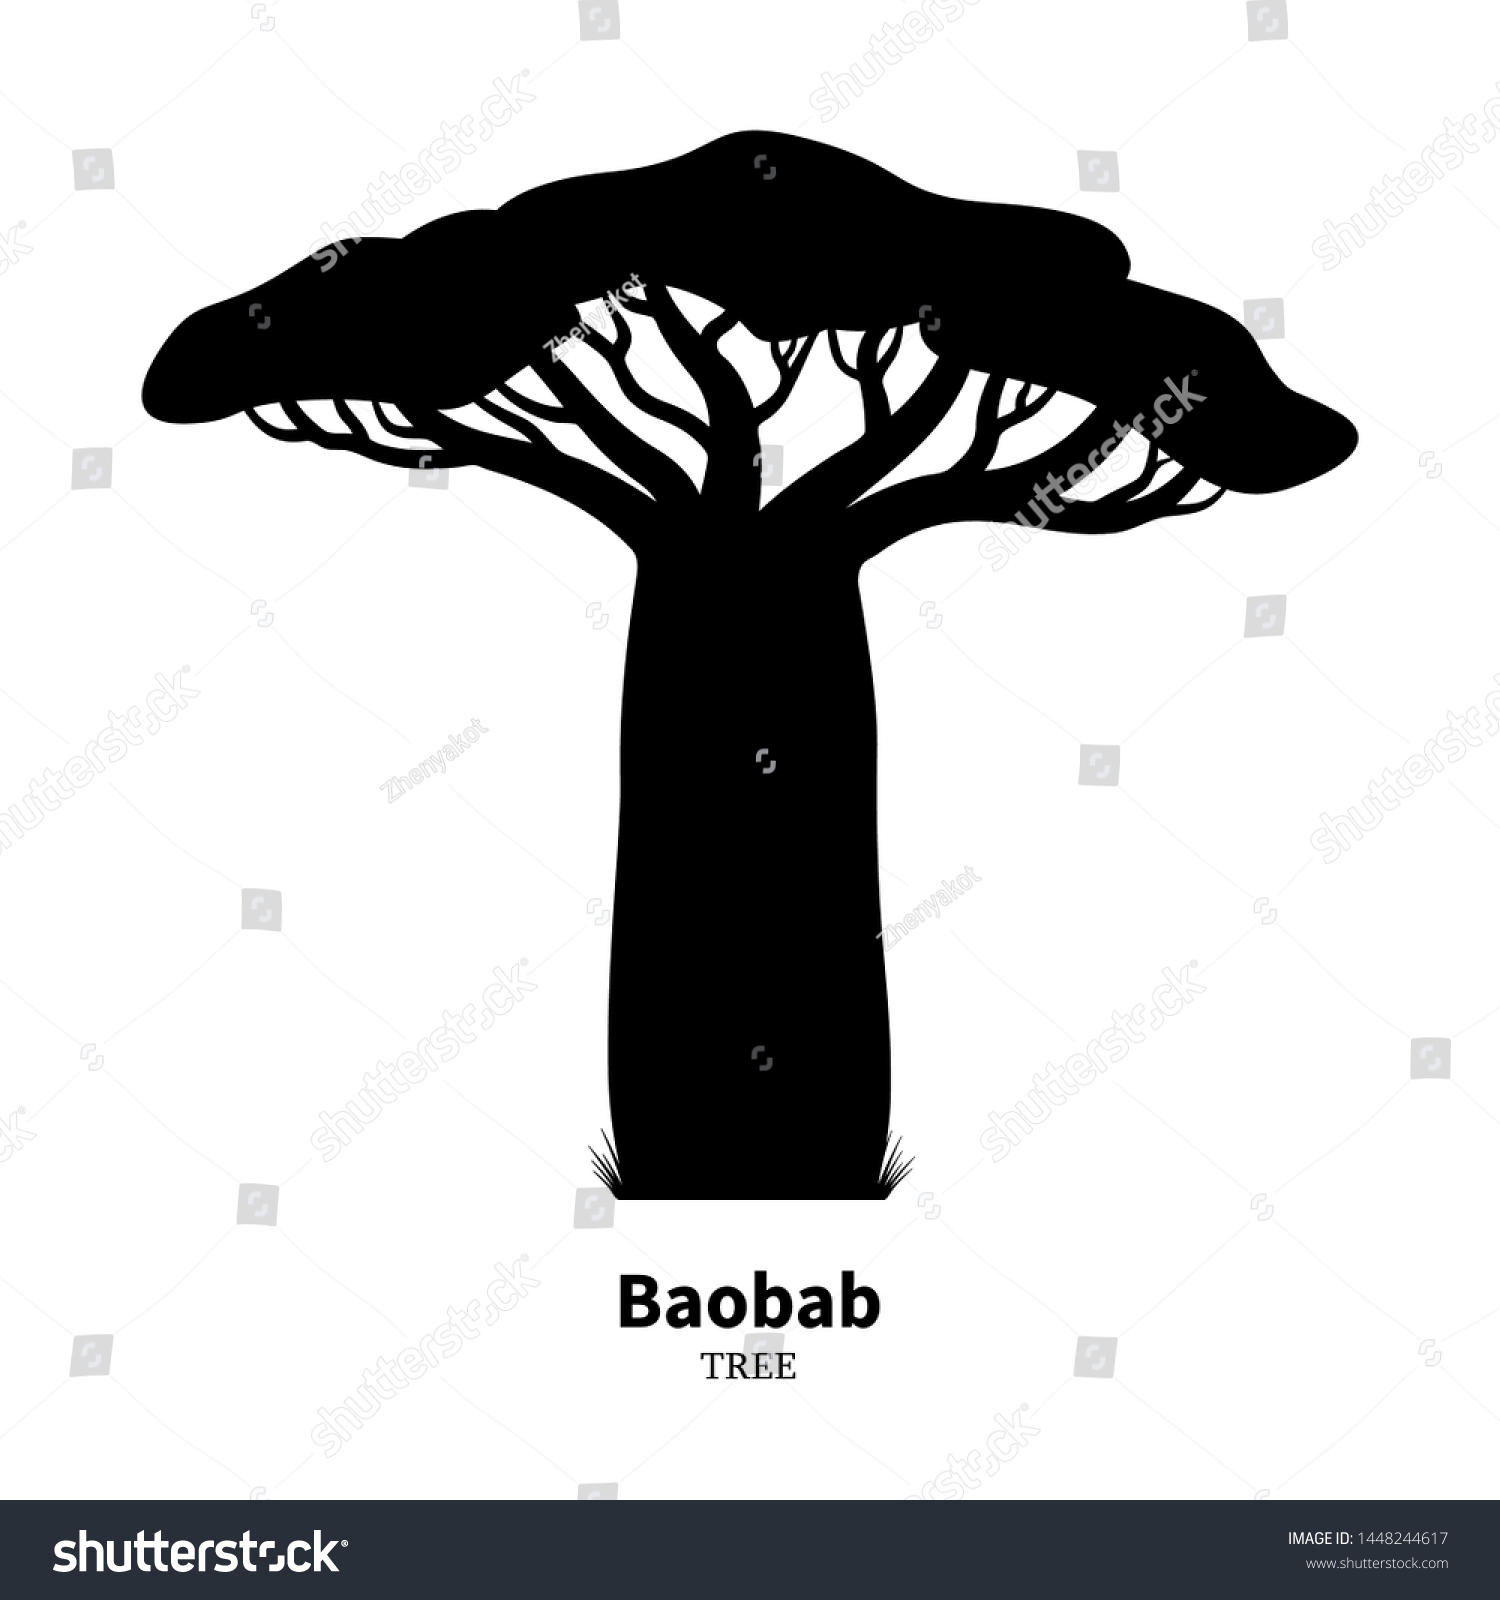 SVG of Black baobab tree silhouette. Vector illustration isolated on white background. Baobab logo icon. svg